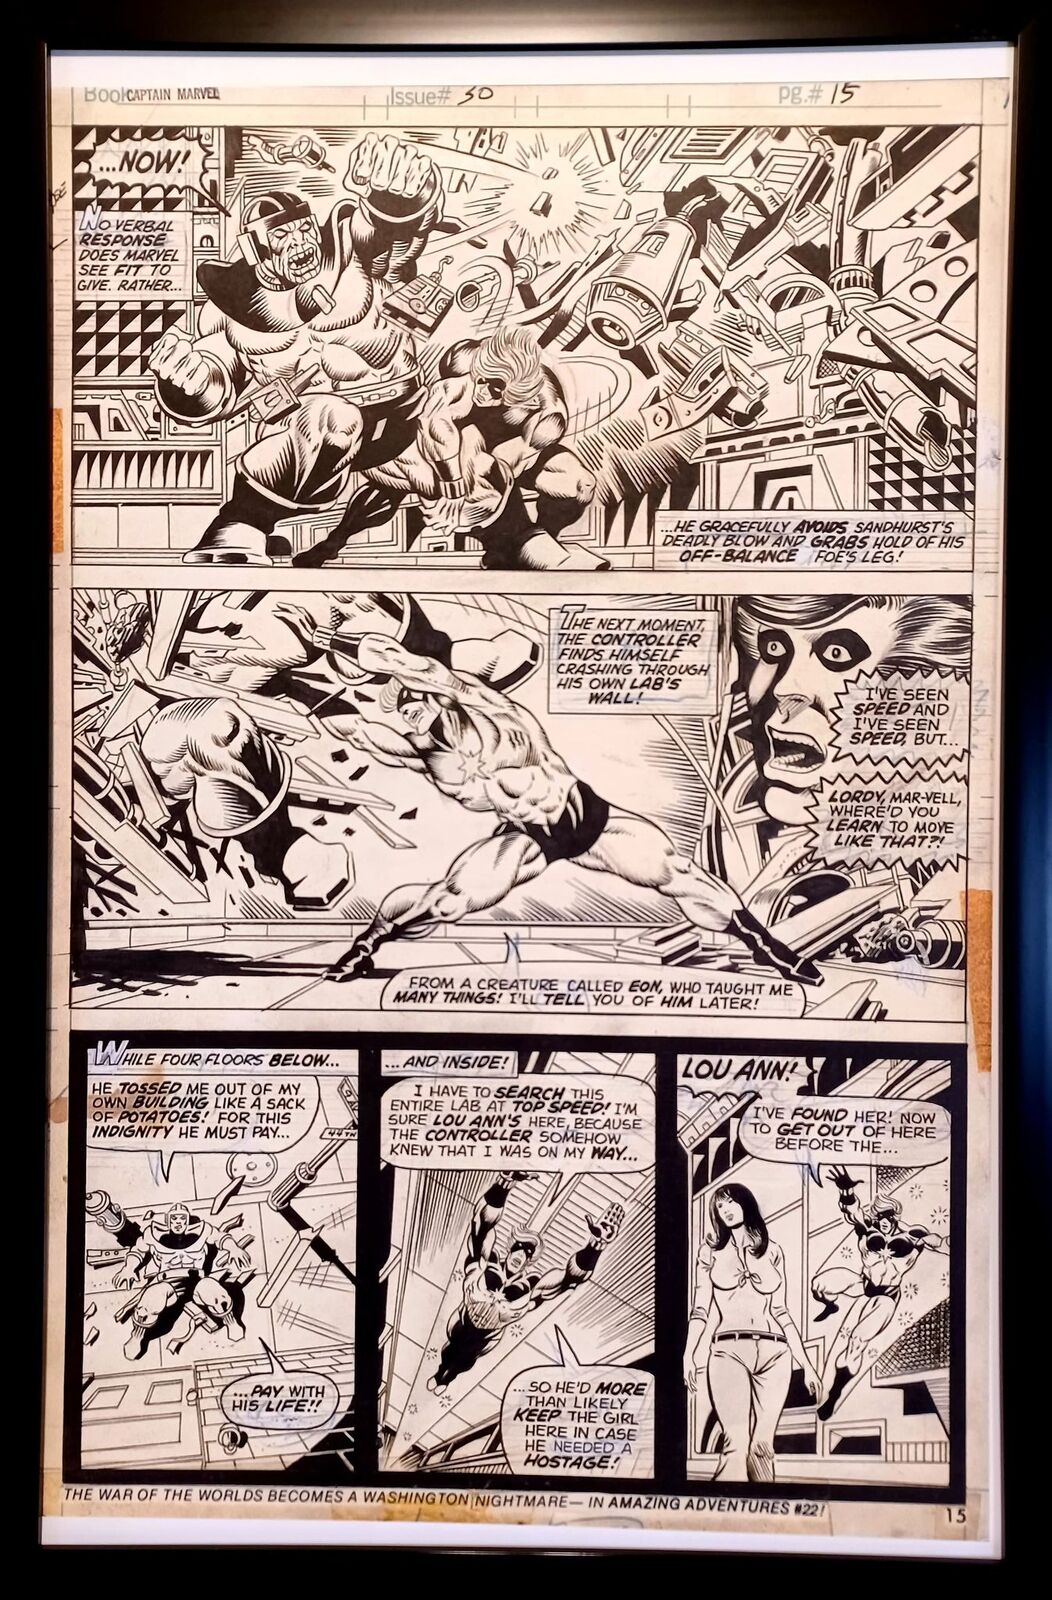 Captain Marvel #30 pg. 15 by Jim Starlin 11x17 FRAMED Original Art Print Comic P